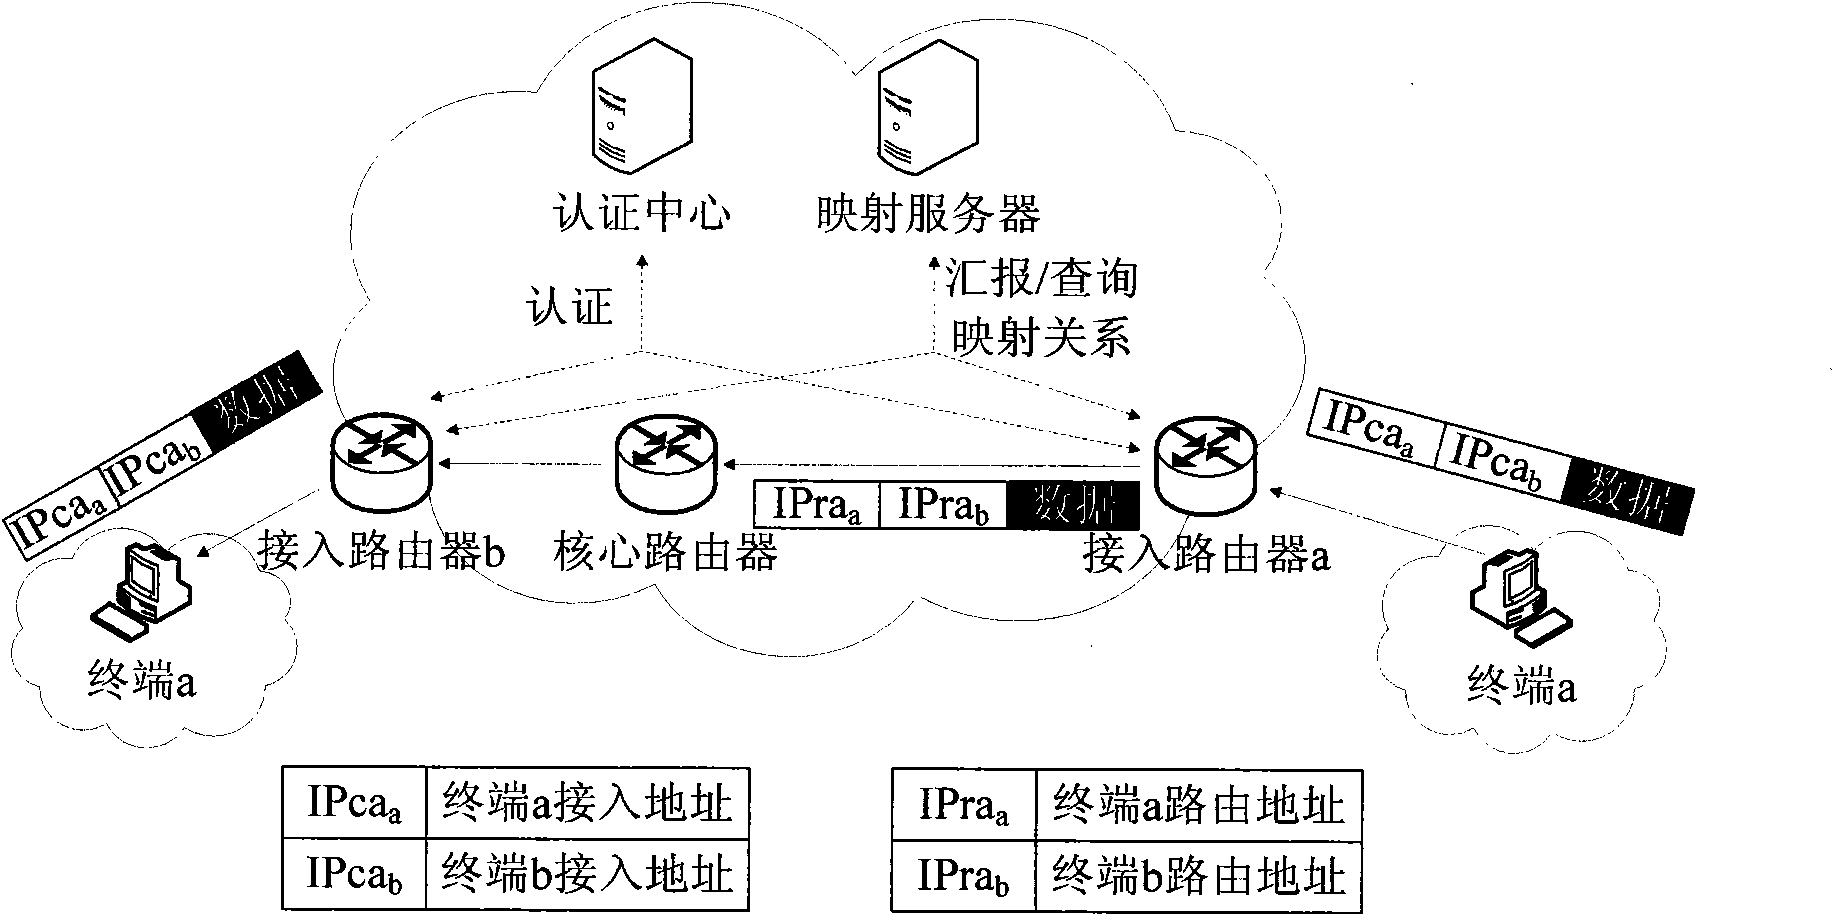 Deployment method of IPSec-VPN in address discrete mapping network